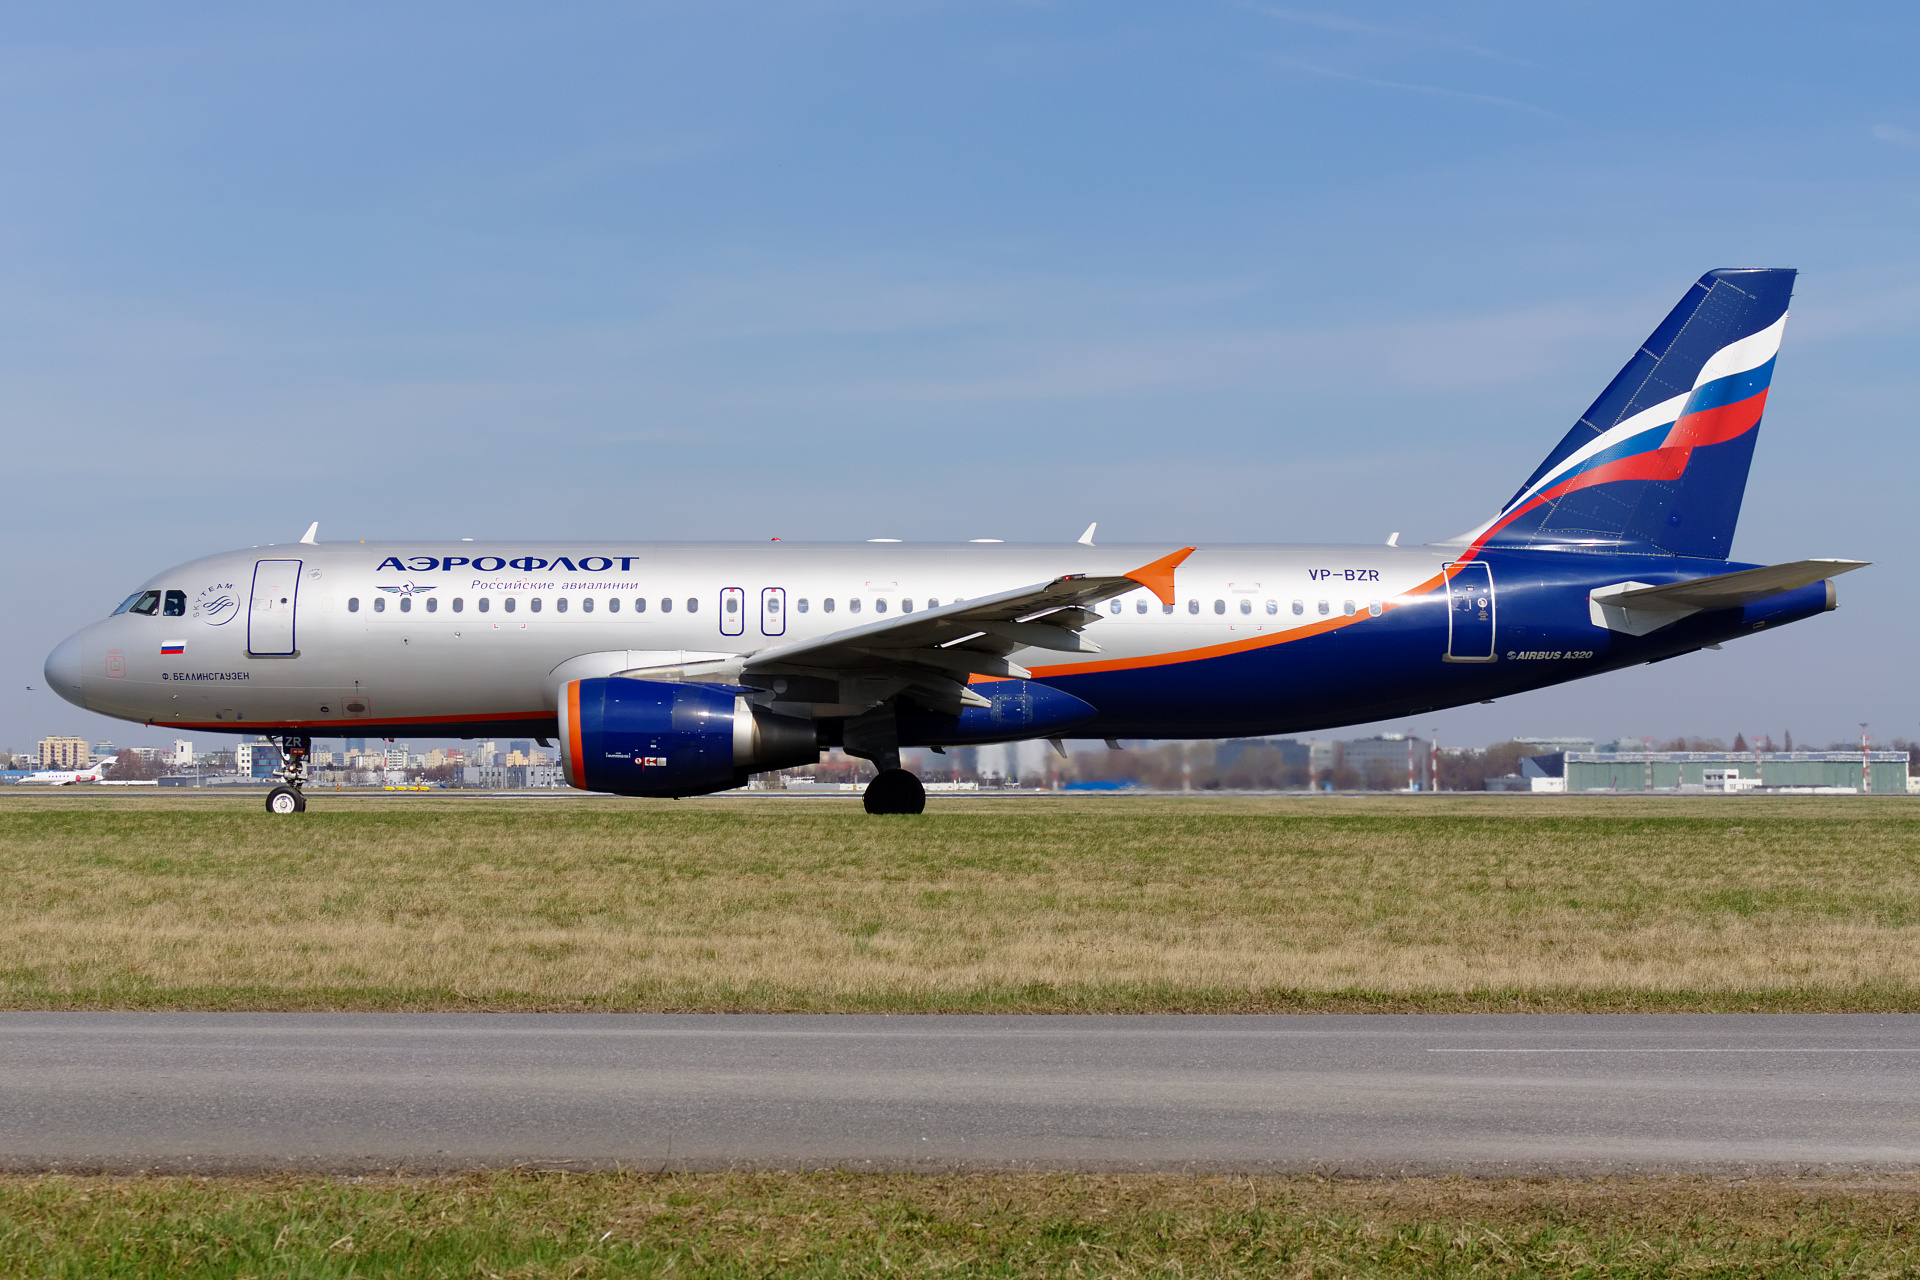 VP-BZR (Aircraft » EPWA Spotting » Airbus A320-200 » Aeroflot Russian Airlines)